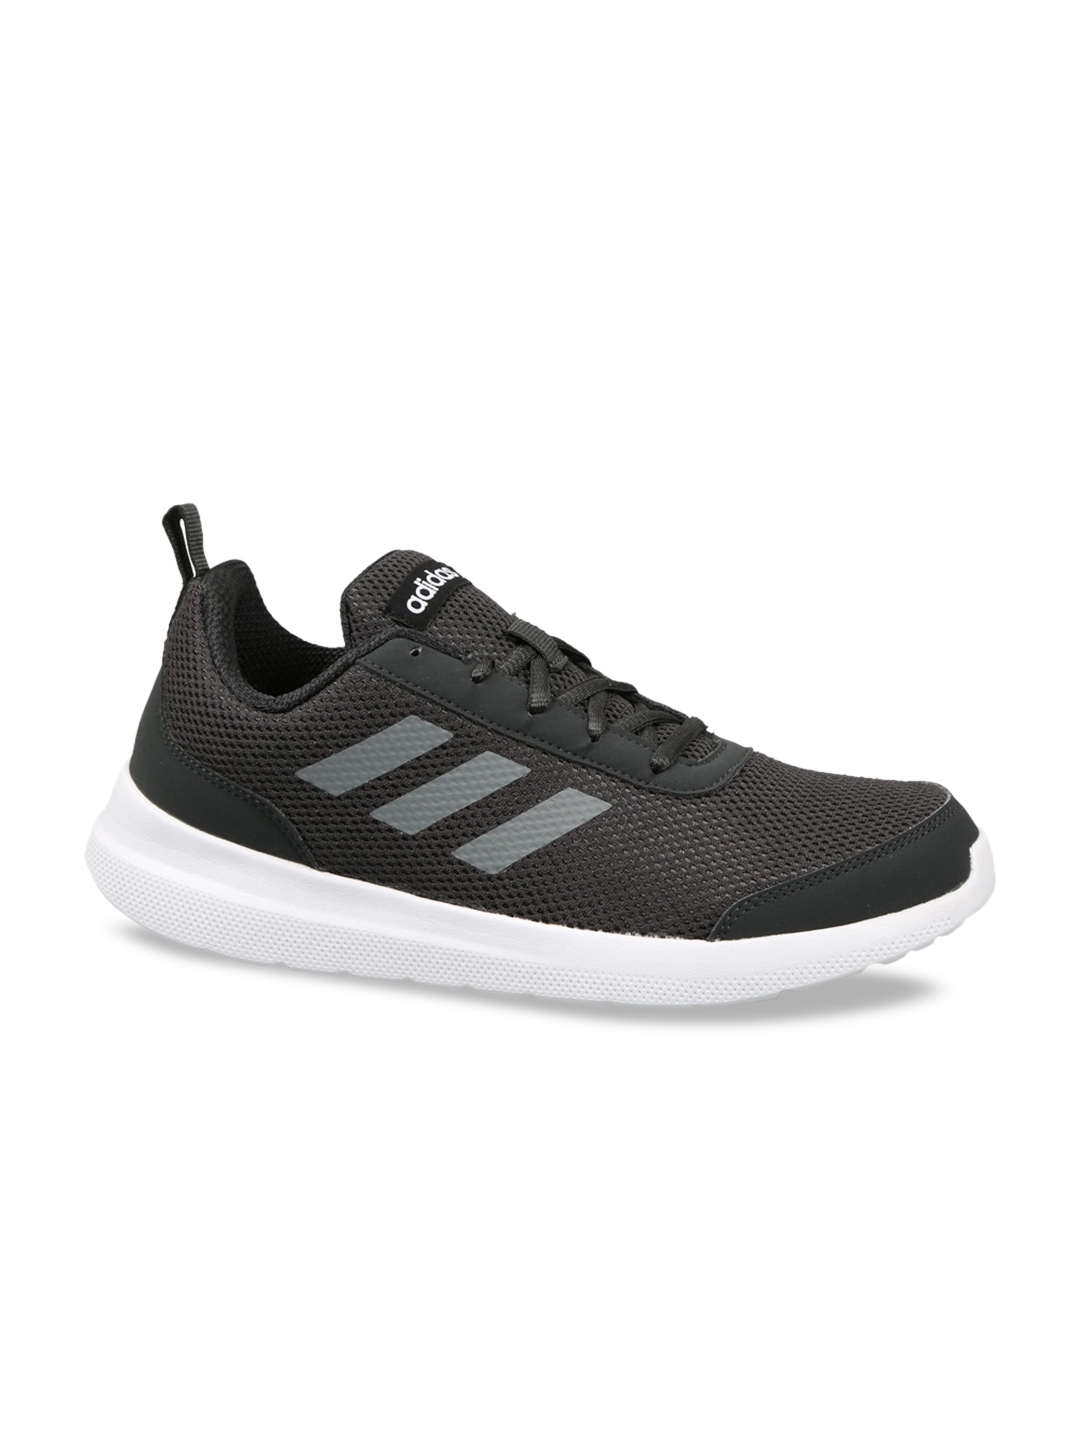 Buy ADIDAS Men Black & Grey Running Shoes - Sports Shoes for Men ...